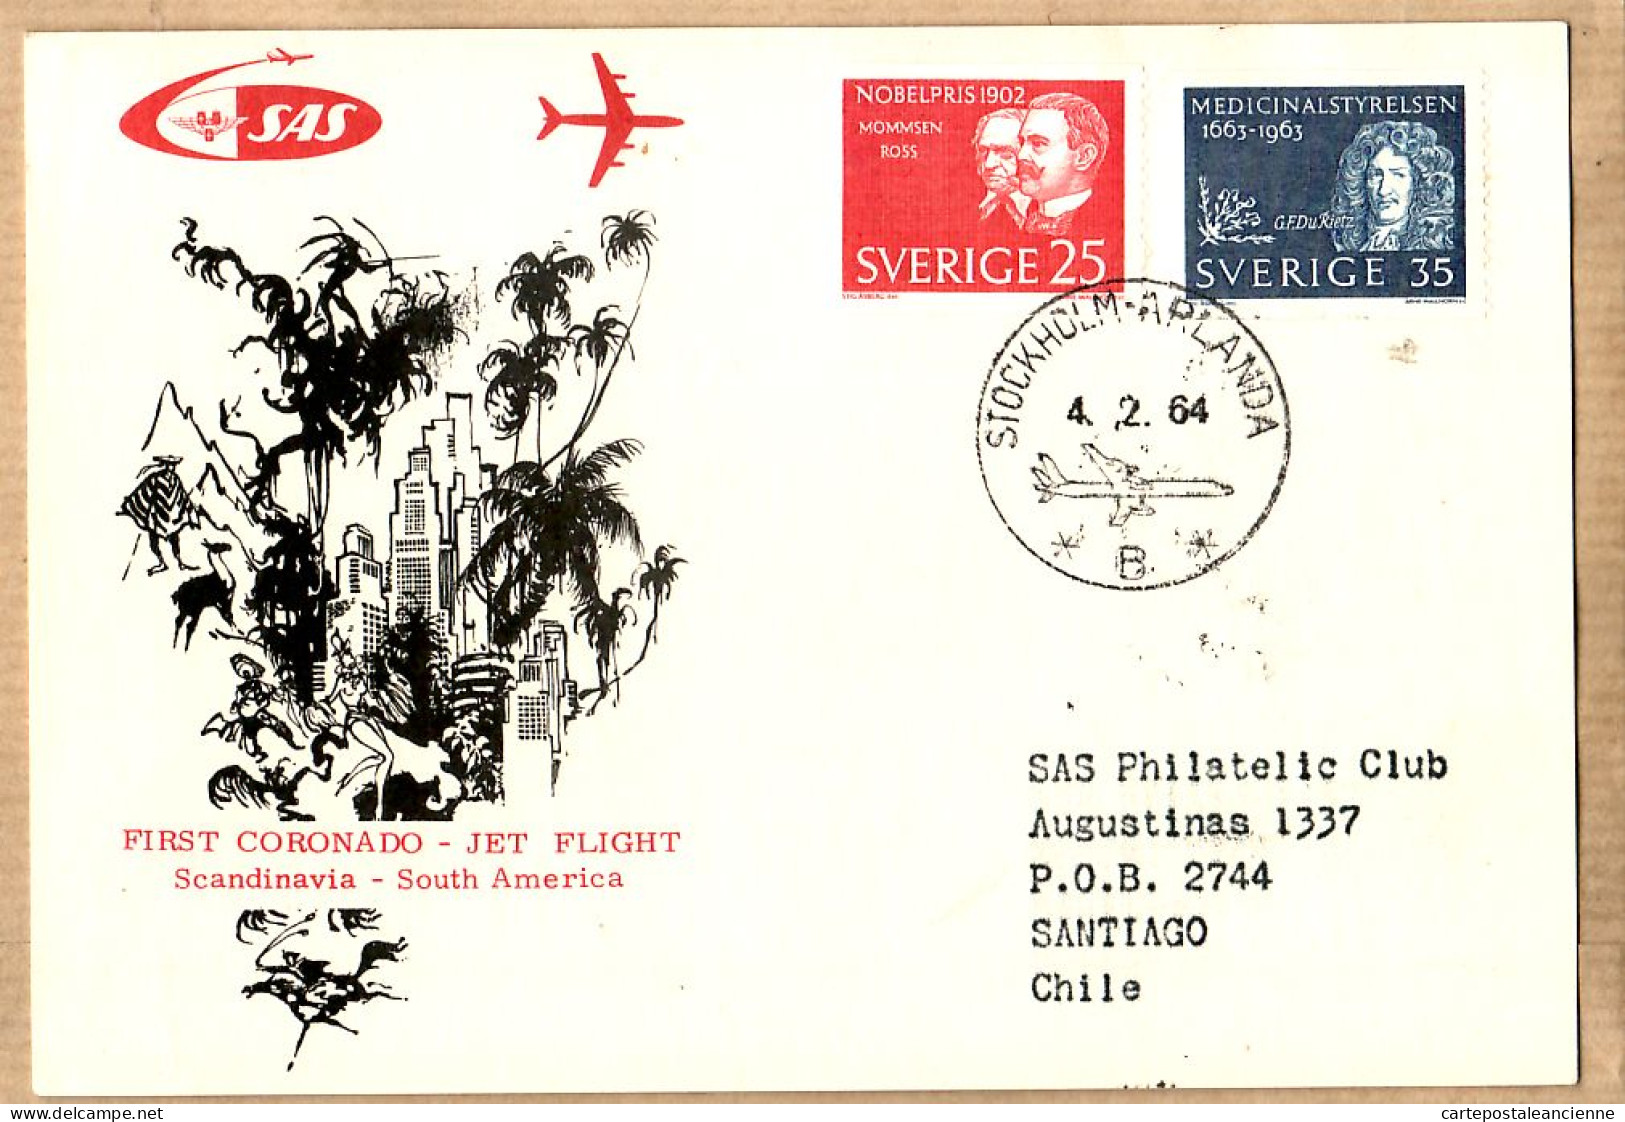 04532 / Sweden First SAS CORONADO Jet Flight Scandinavia SOUTH-AMERICA 04-02-1964 STOCKHOLM ARLANDA SANTIAGO CHILE Cpav - Storia Postale